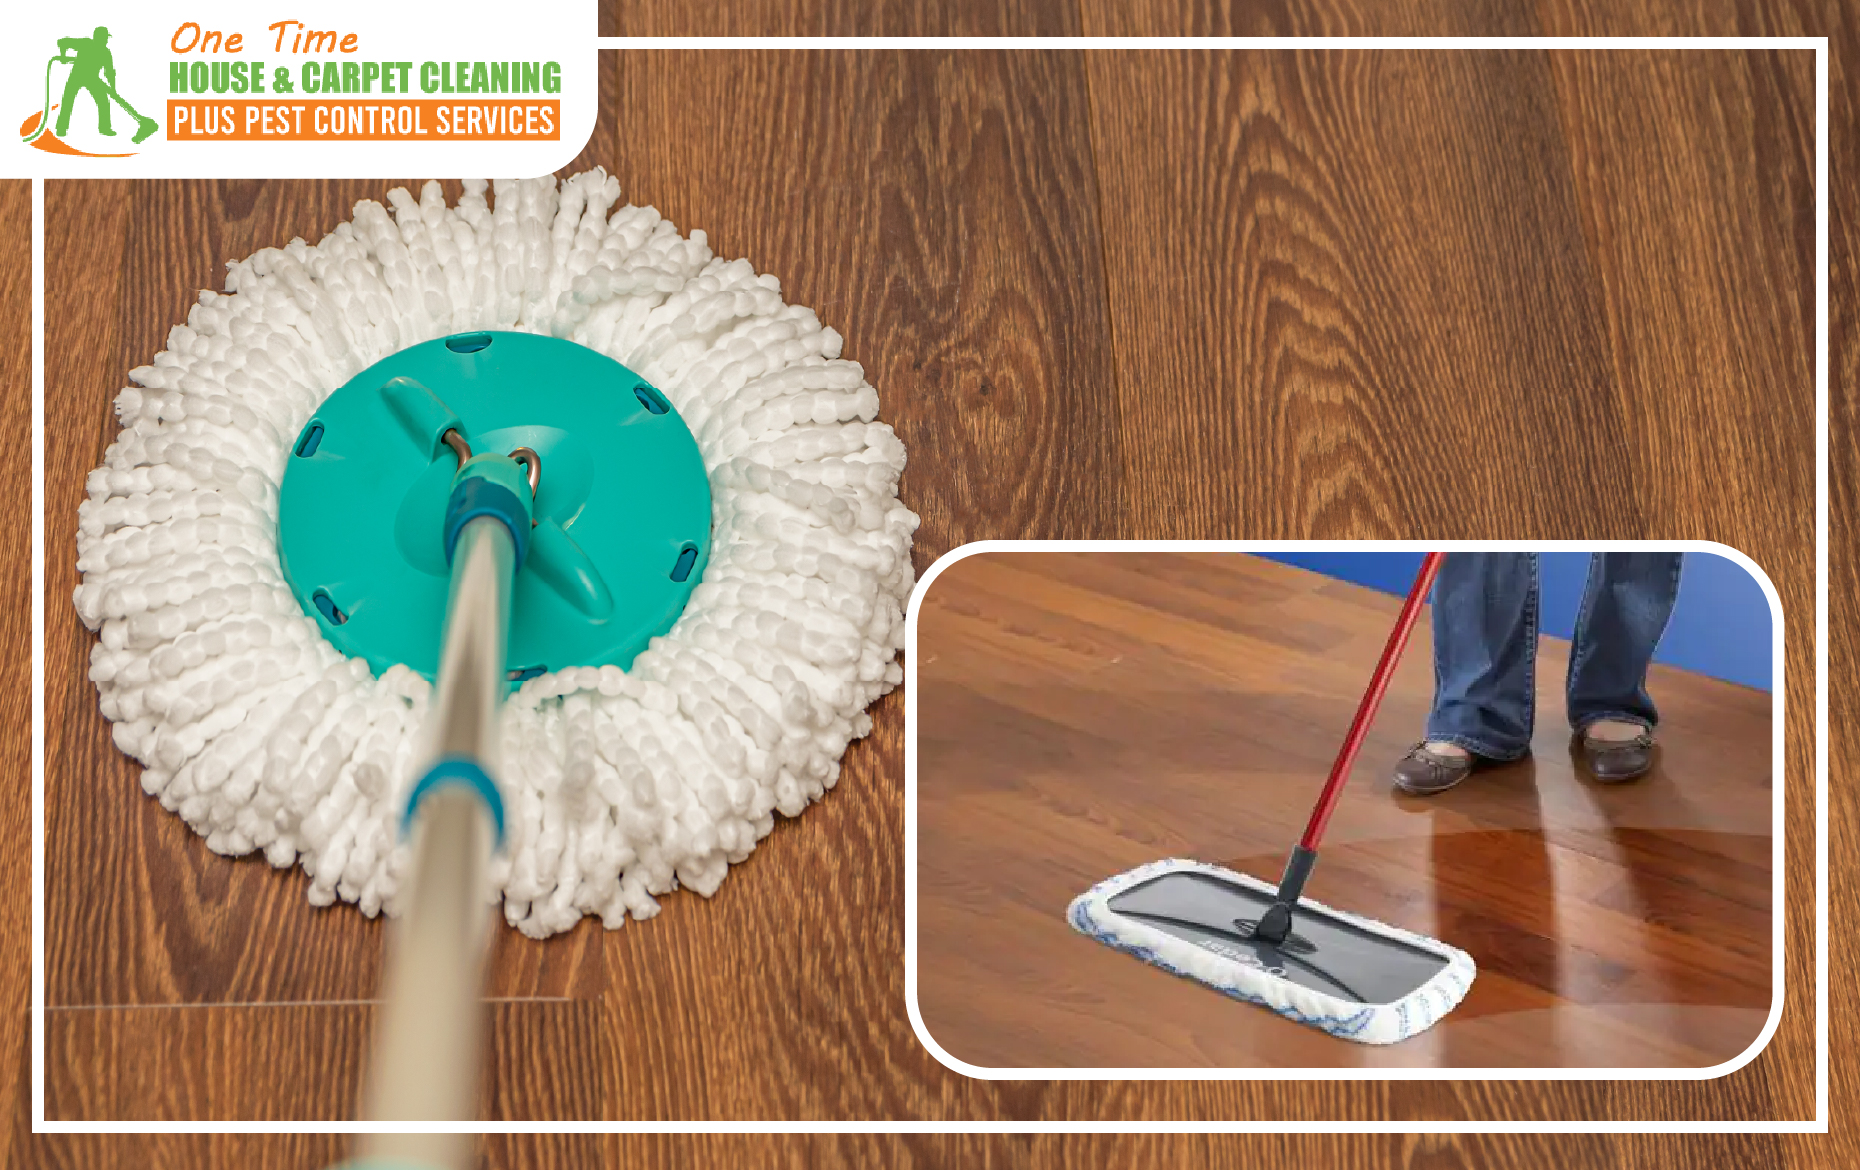 circular-and-rectangular-surface-mopping-brush-on-hardwood-floor